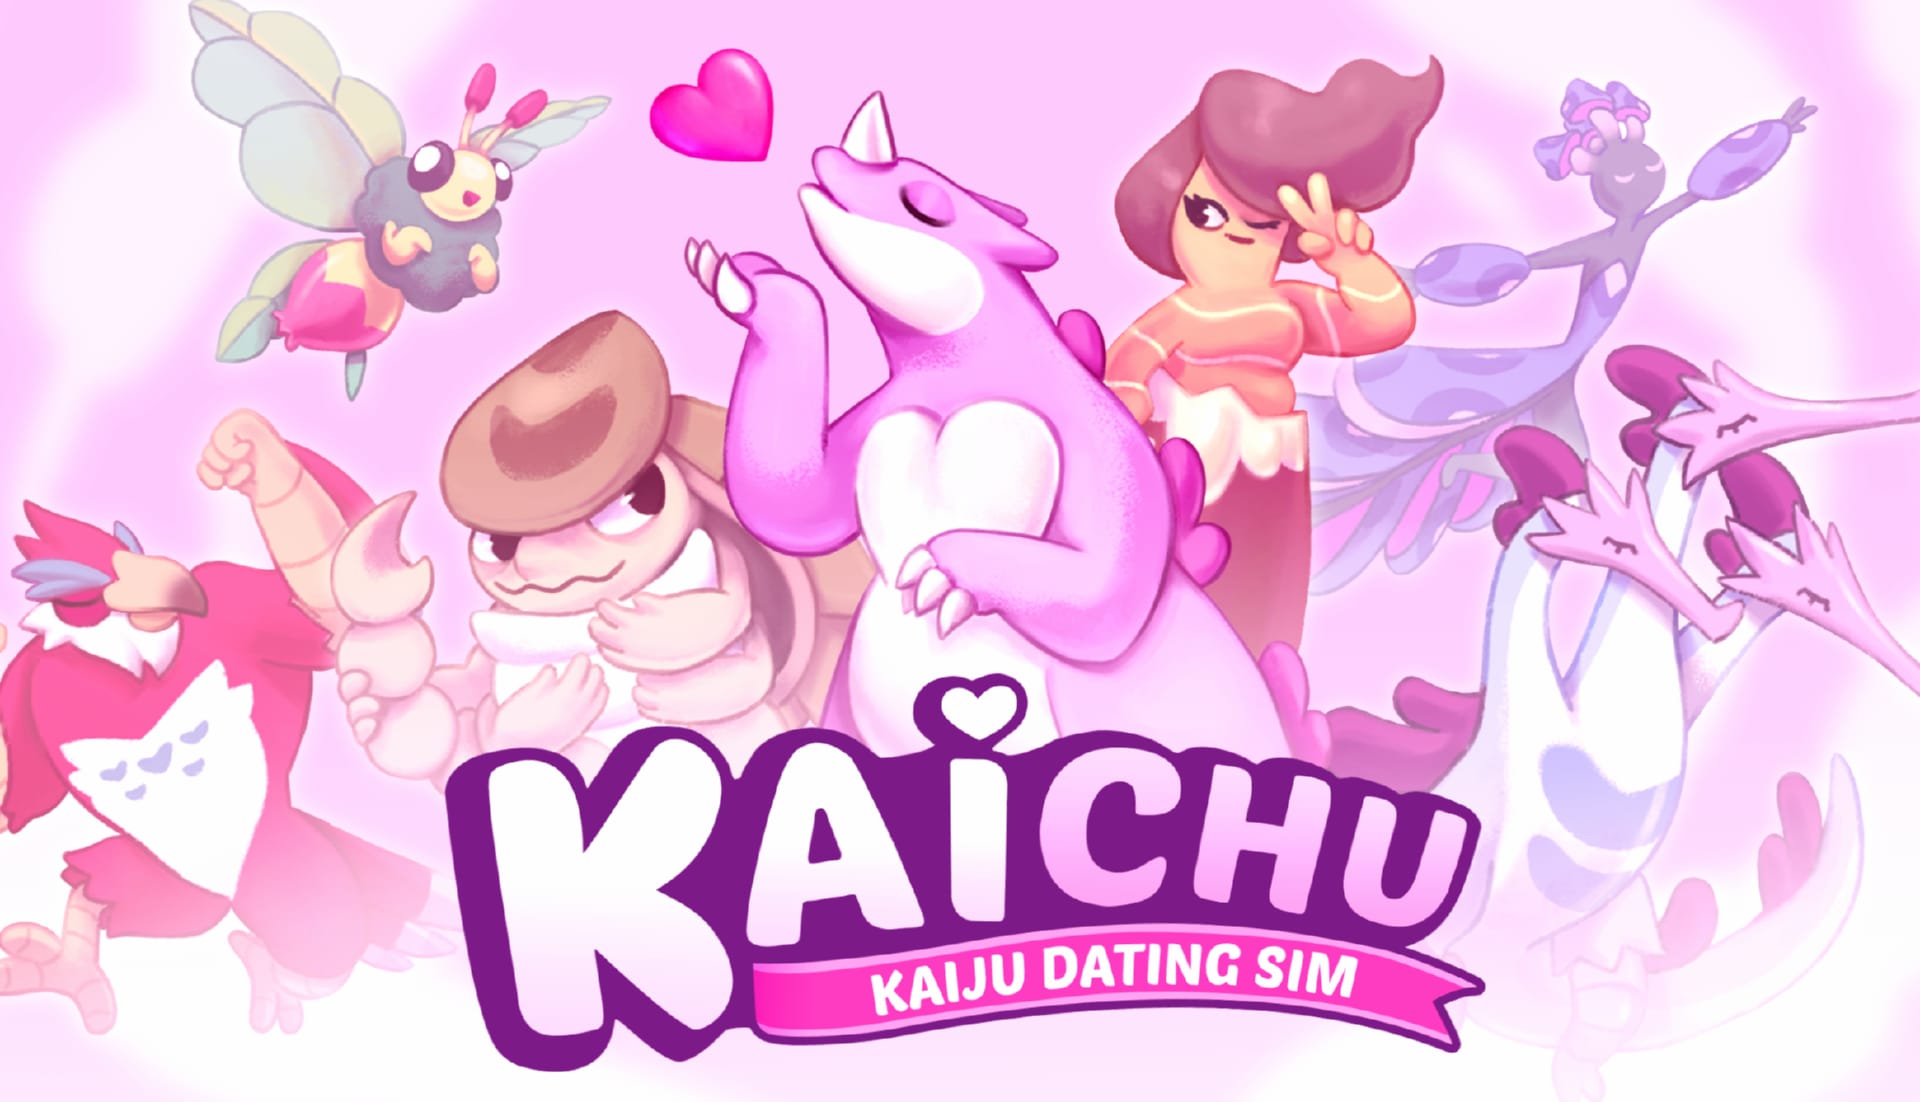 Kaichu - The Kaiju Dating Sim at 1024 x 1024 iPad size wallpapers HD quality